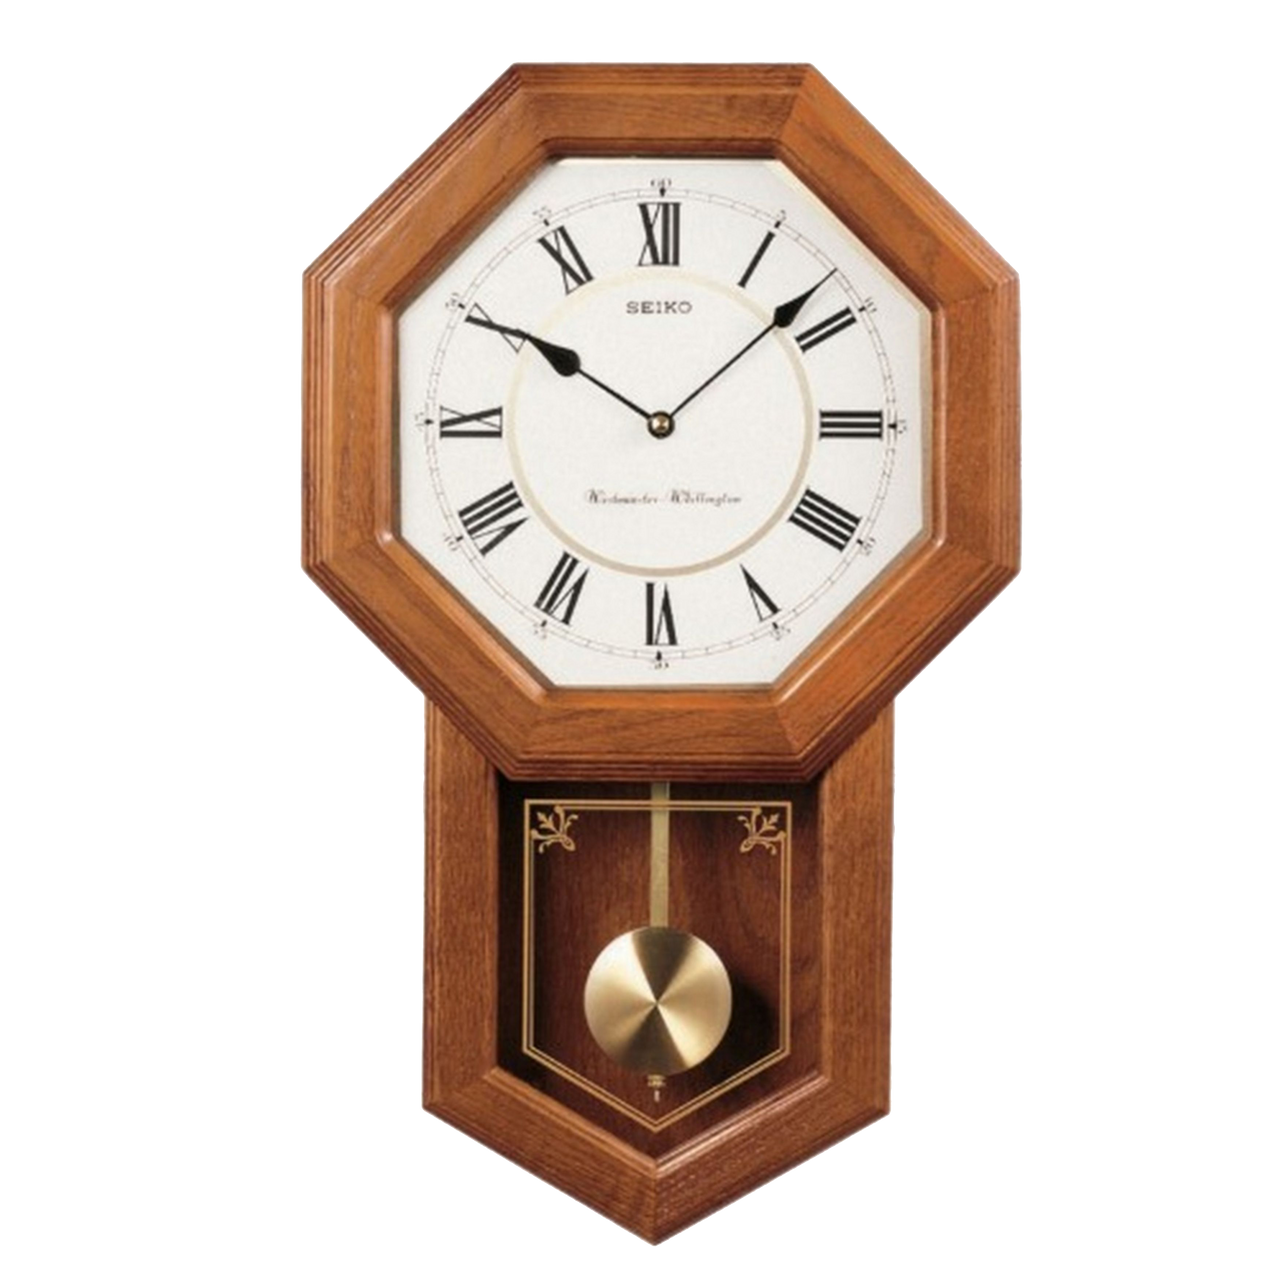 Wall Clock ø 60 cm Light Wood CABORCA 